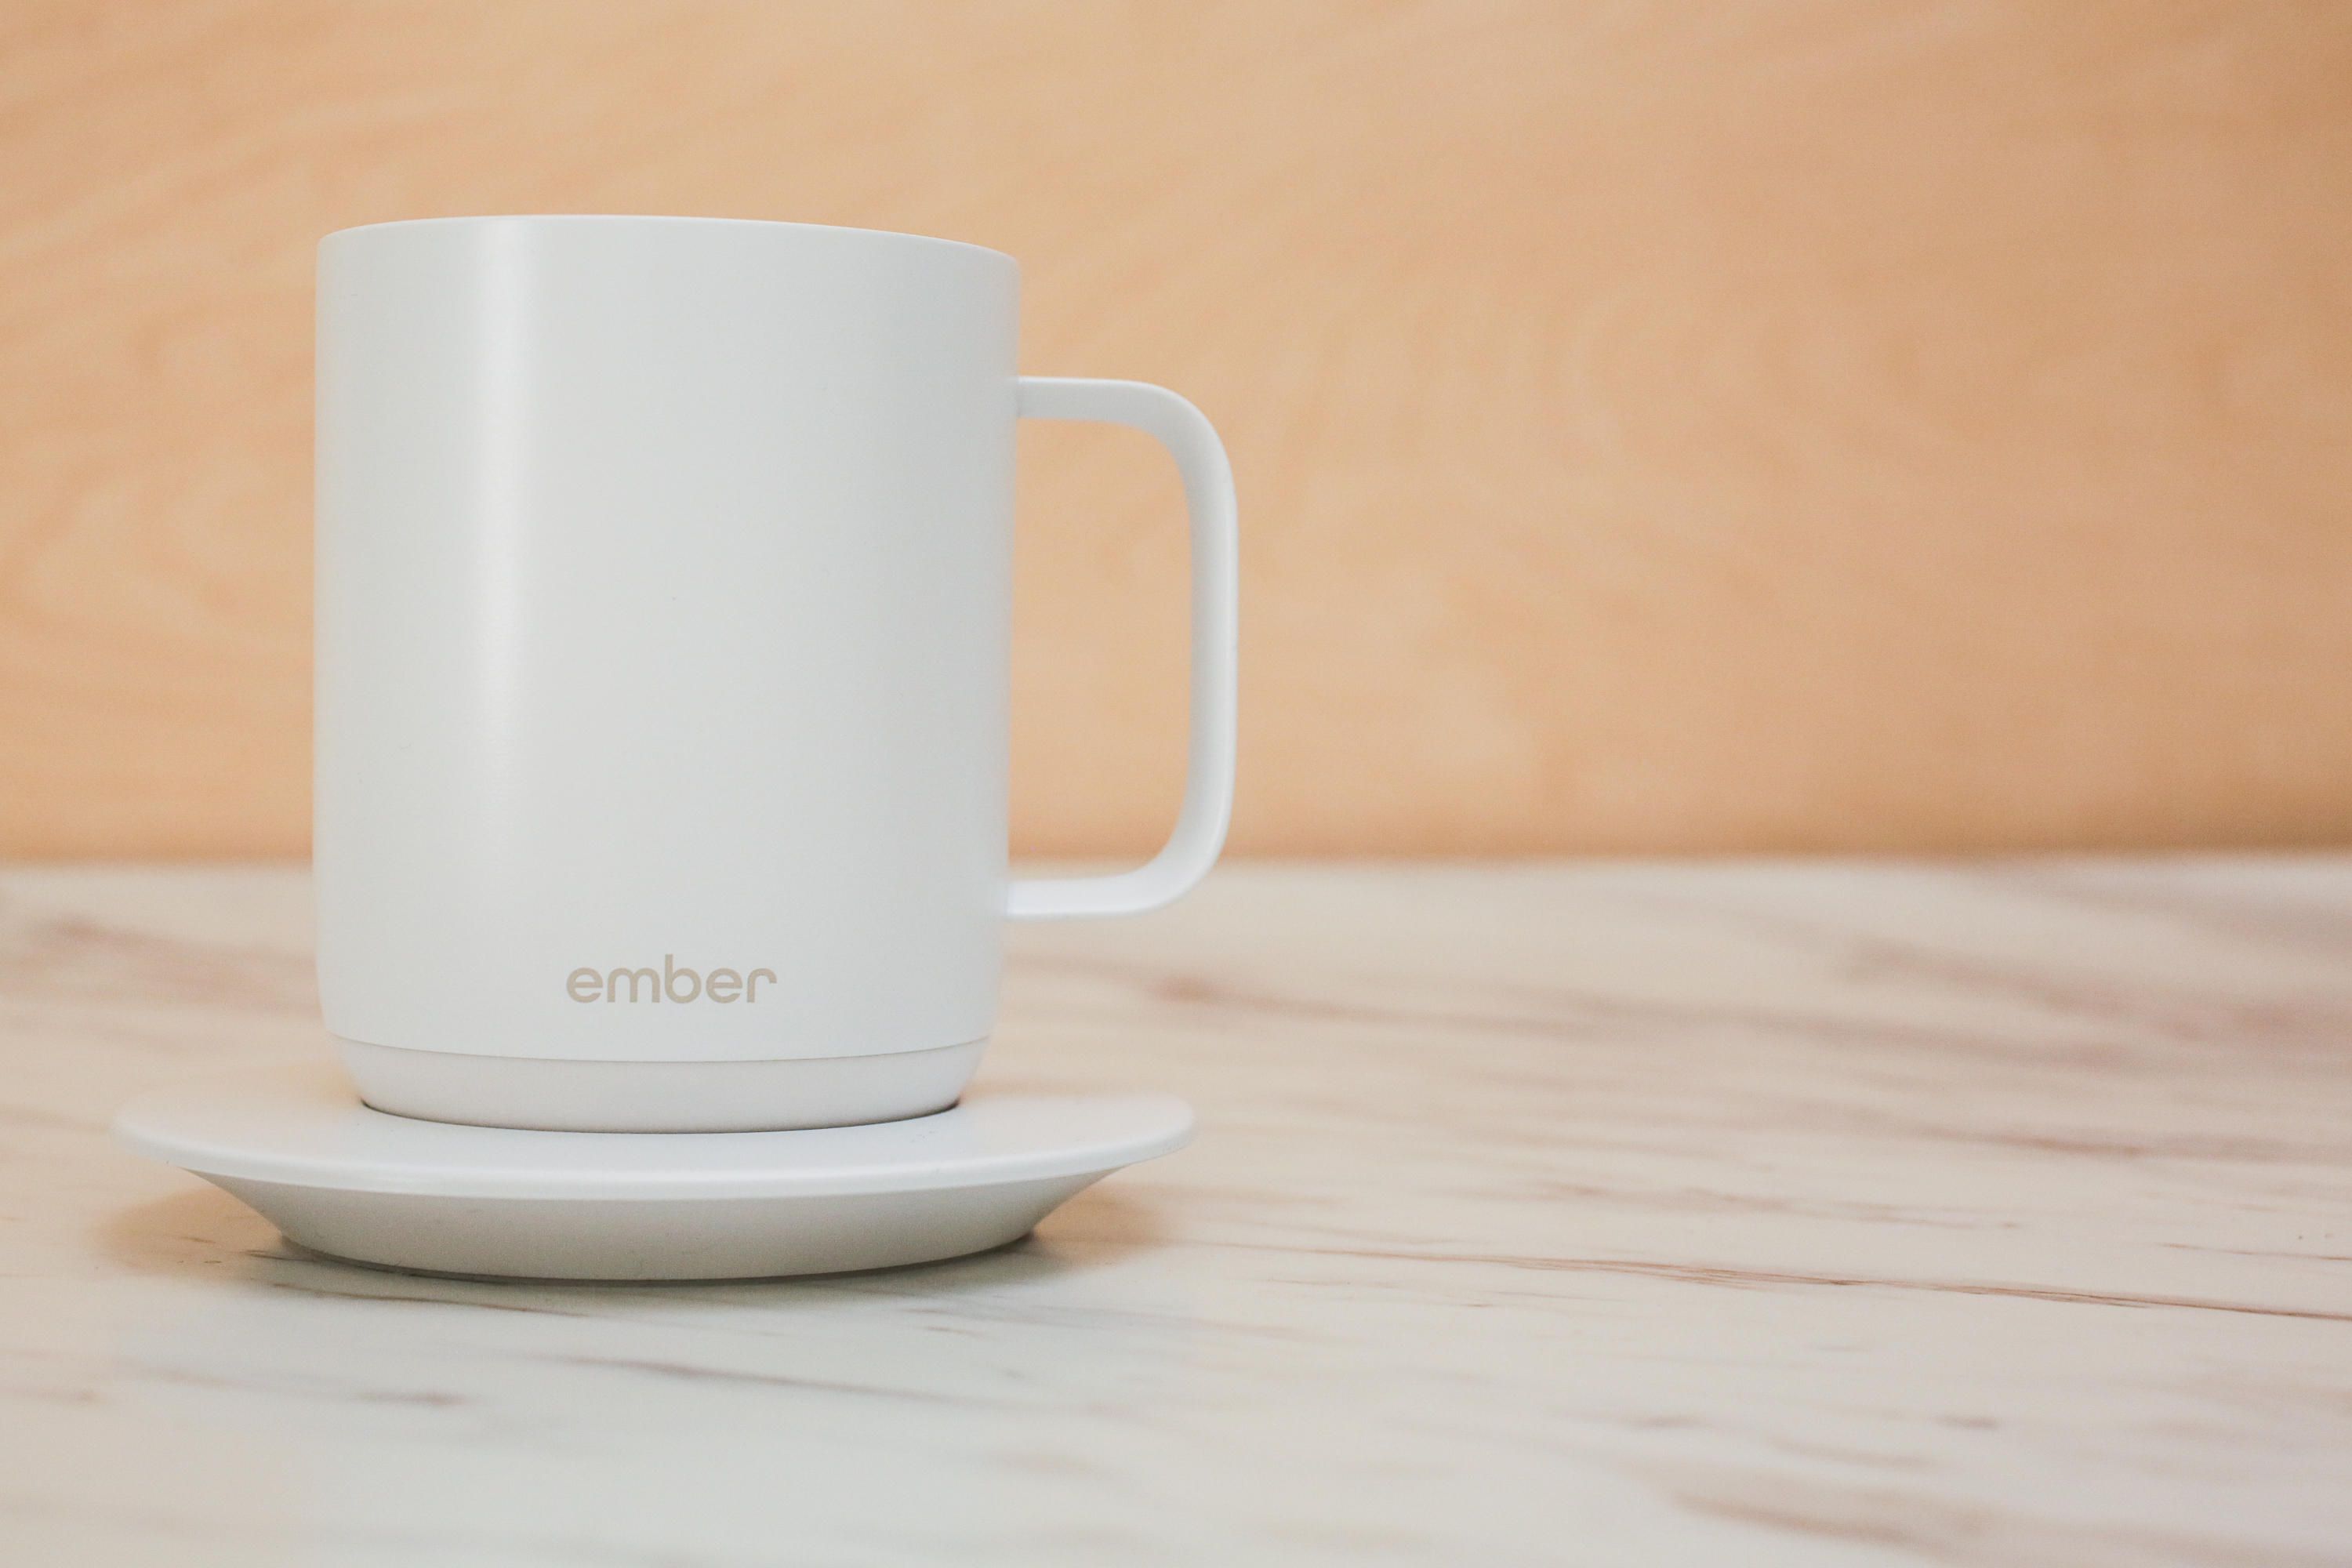 Ember's new smart coffee mug dials up the heat - CNET